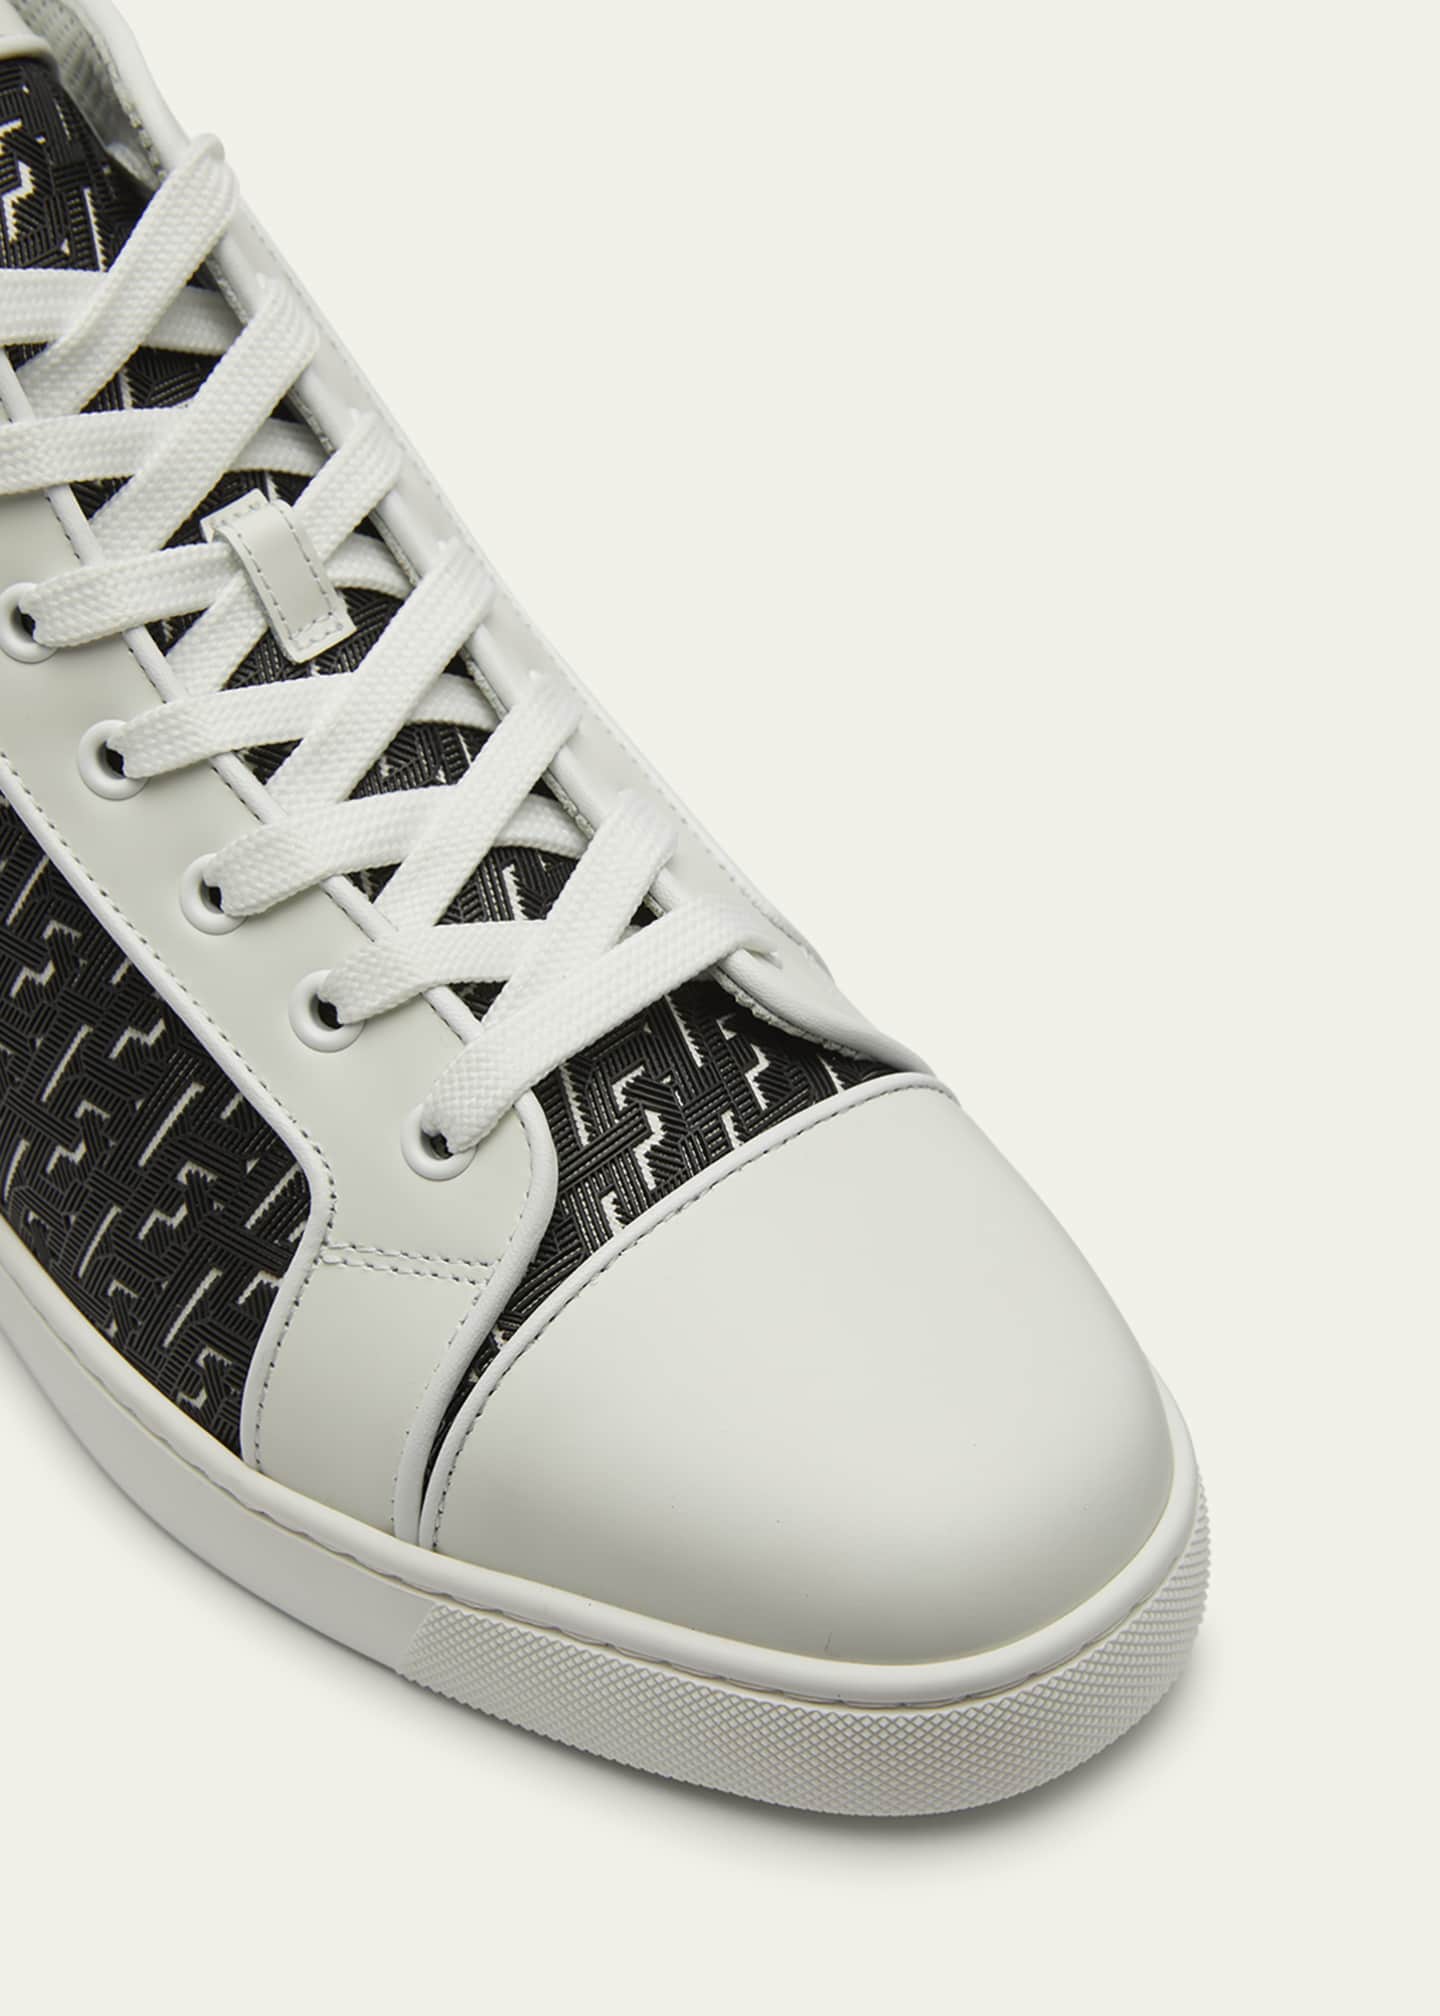 Christian Louboutin Men's Louis Starlight Patent Leather High-Top Sneakers  - Bergdorf Goodman